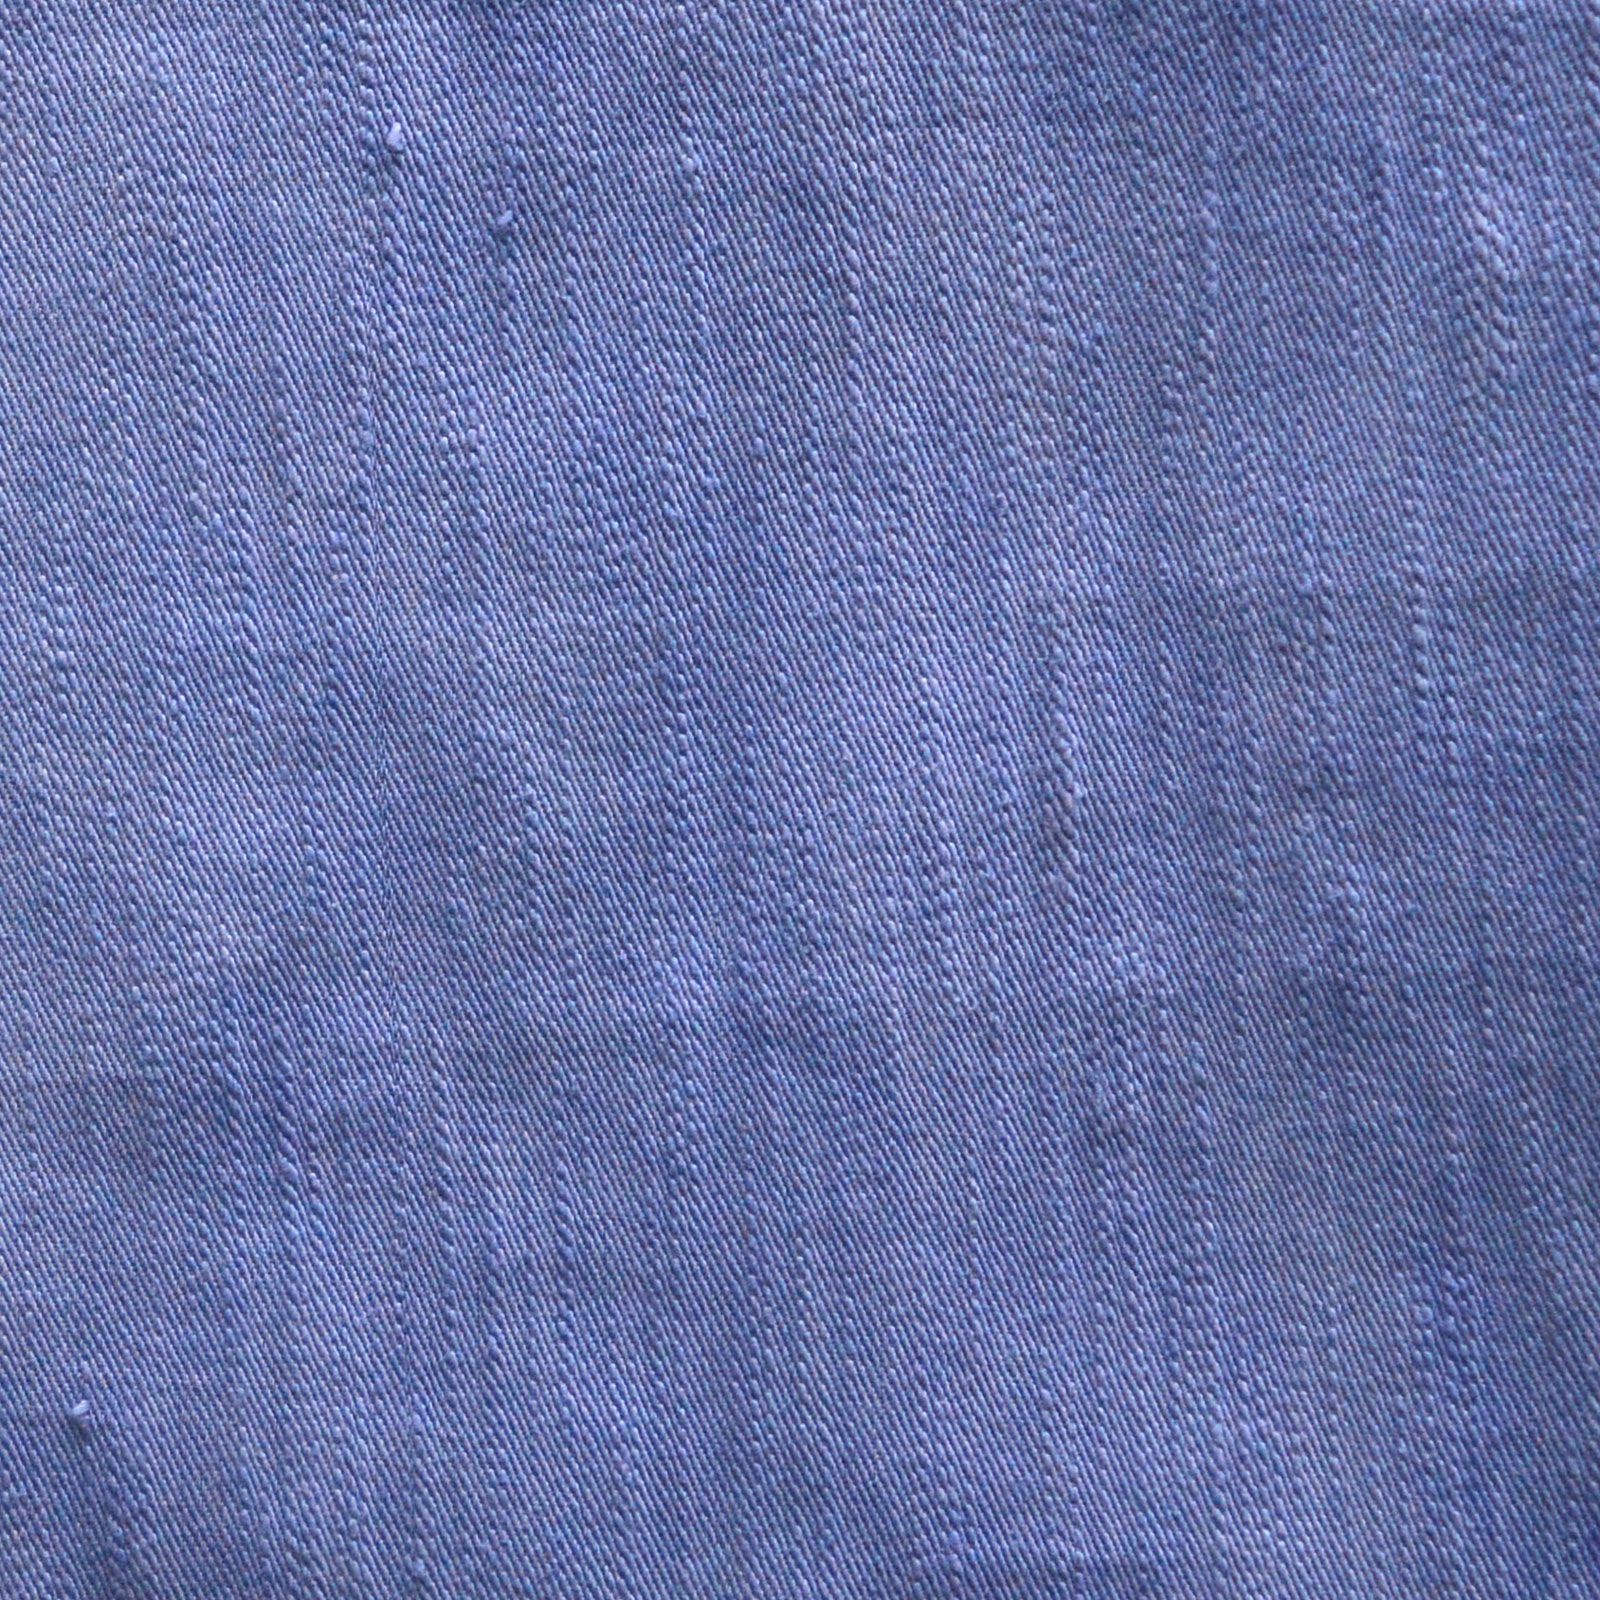 Ecofriendly Handwoven SelvedgeDenim - 9.0 Oz - Carolina Blue - Natural Indigo (Fabric Dyed)-MWKD-FBD-1010-CRB-NI